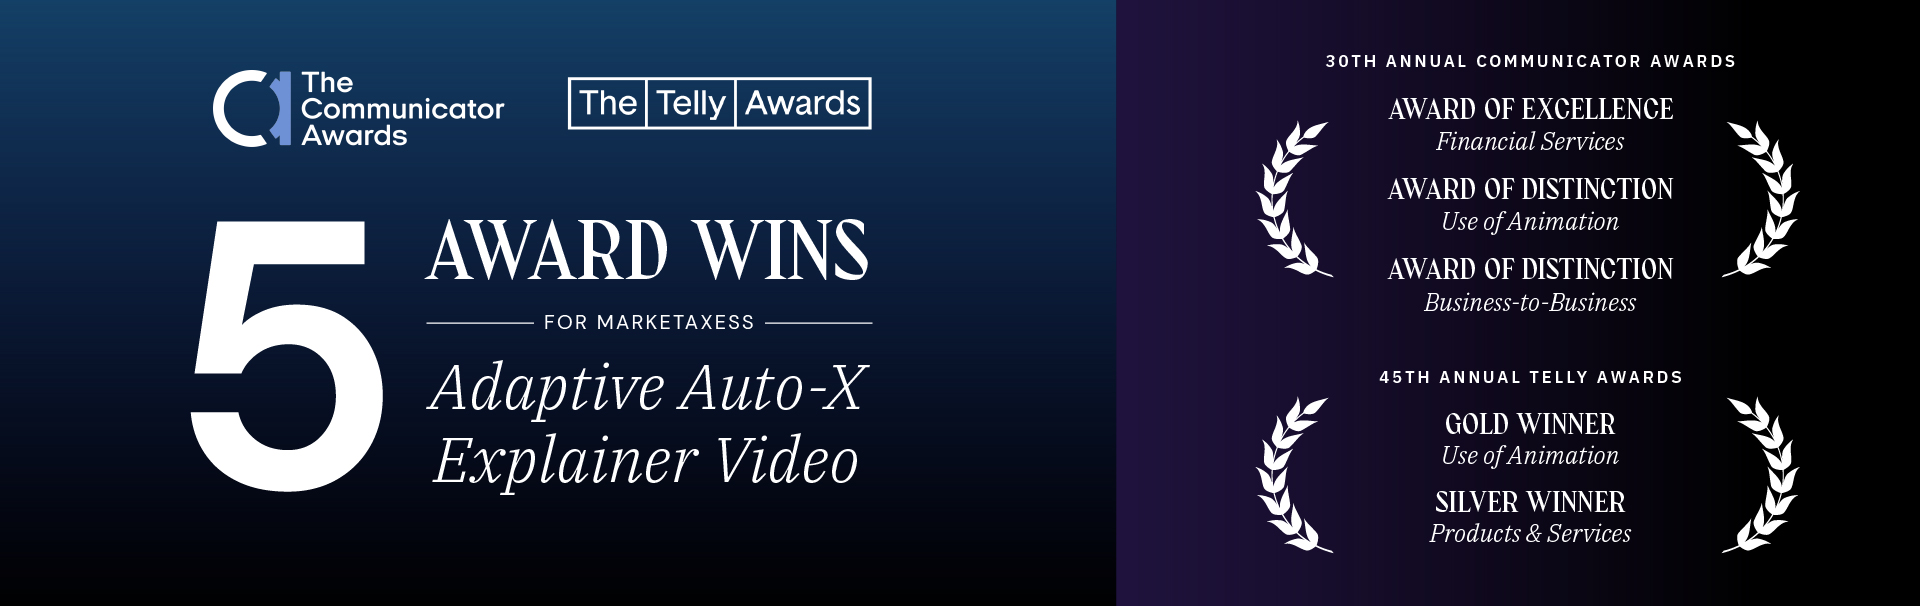 Adaptive Auto-X Video won 5 awards from Communicator Awards and Telly Awards